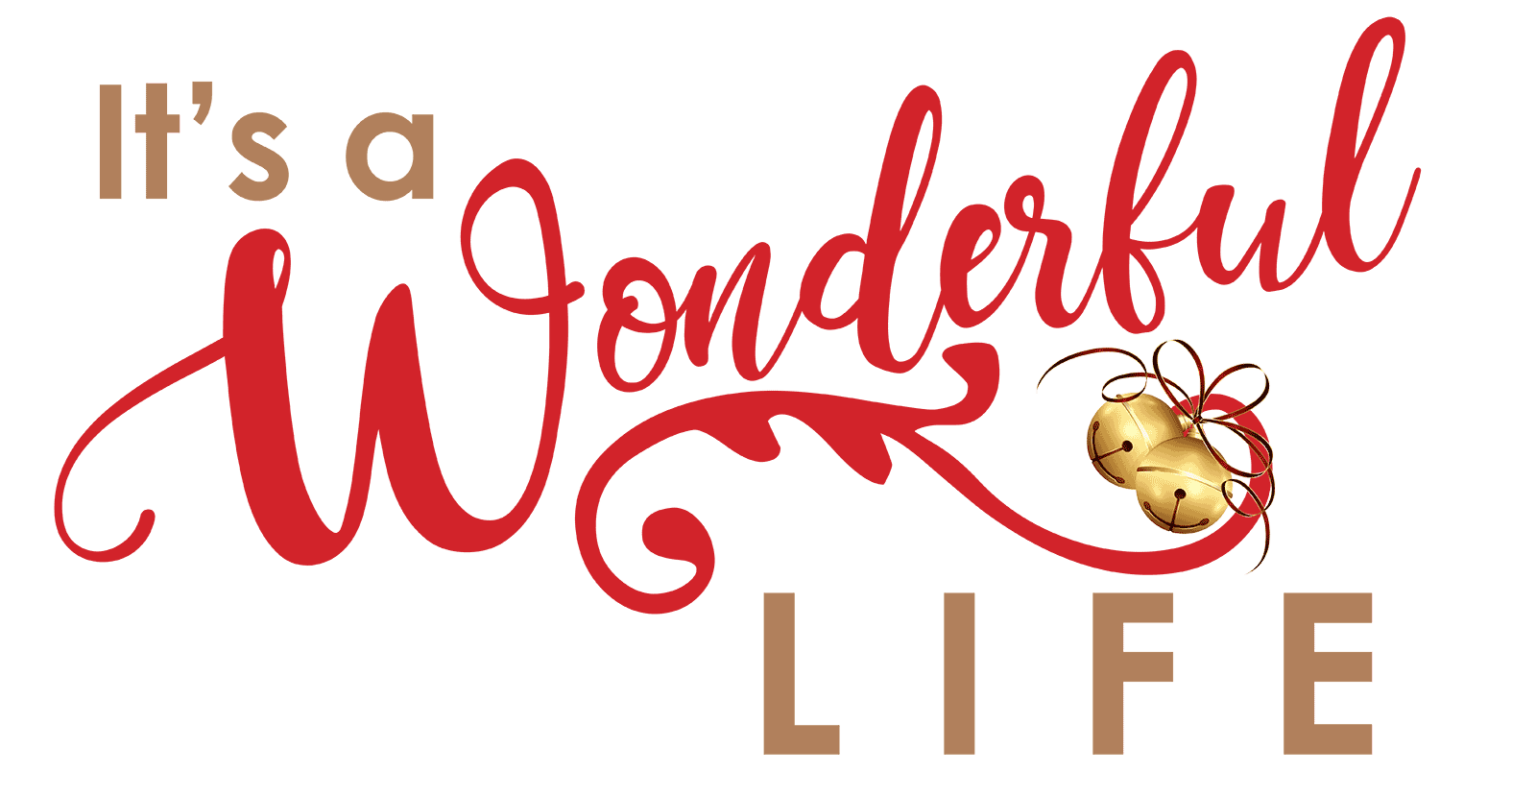 Wonderful life katie. Вандерфул лайф год. ИТС Э Вондерфул лайф. Wonderful Life logo. Вандерфул ИТ щоутайм фон.